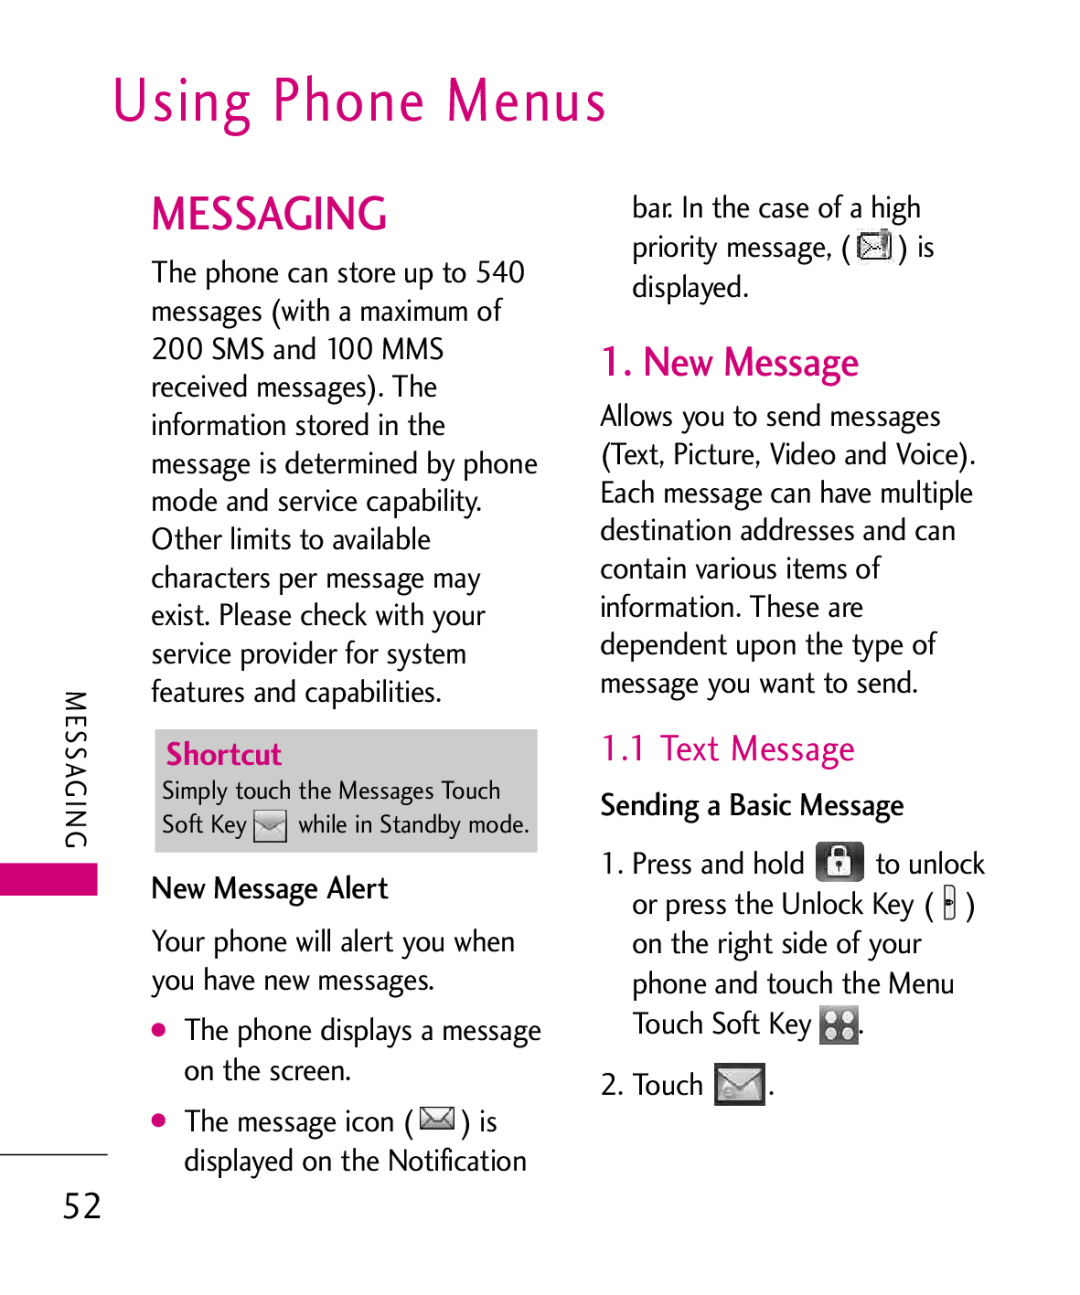 LG Electronics MMBB0379501 Using Phone Menus, Messaging, Shortcut, New Message Alert, Sending a Basic Message, Touch 